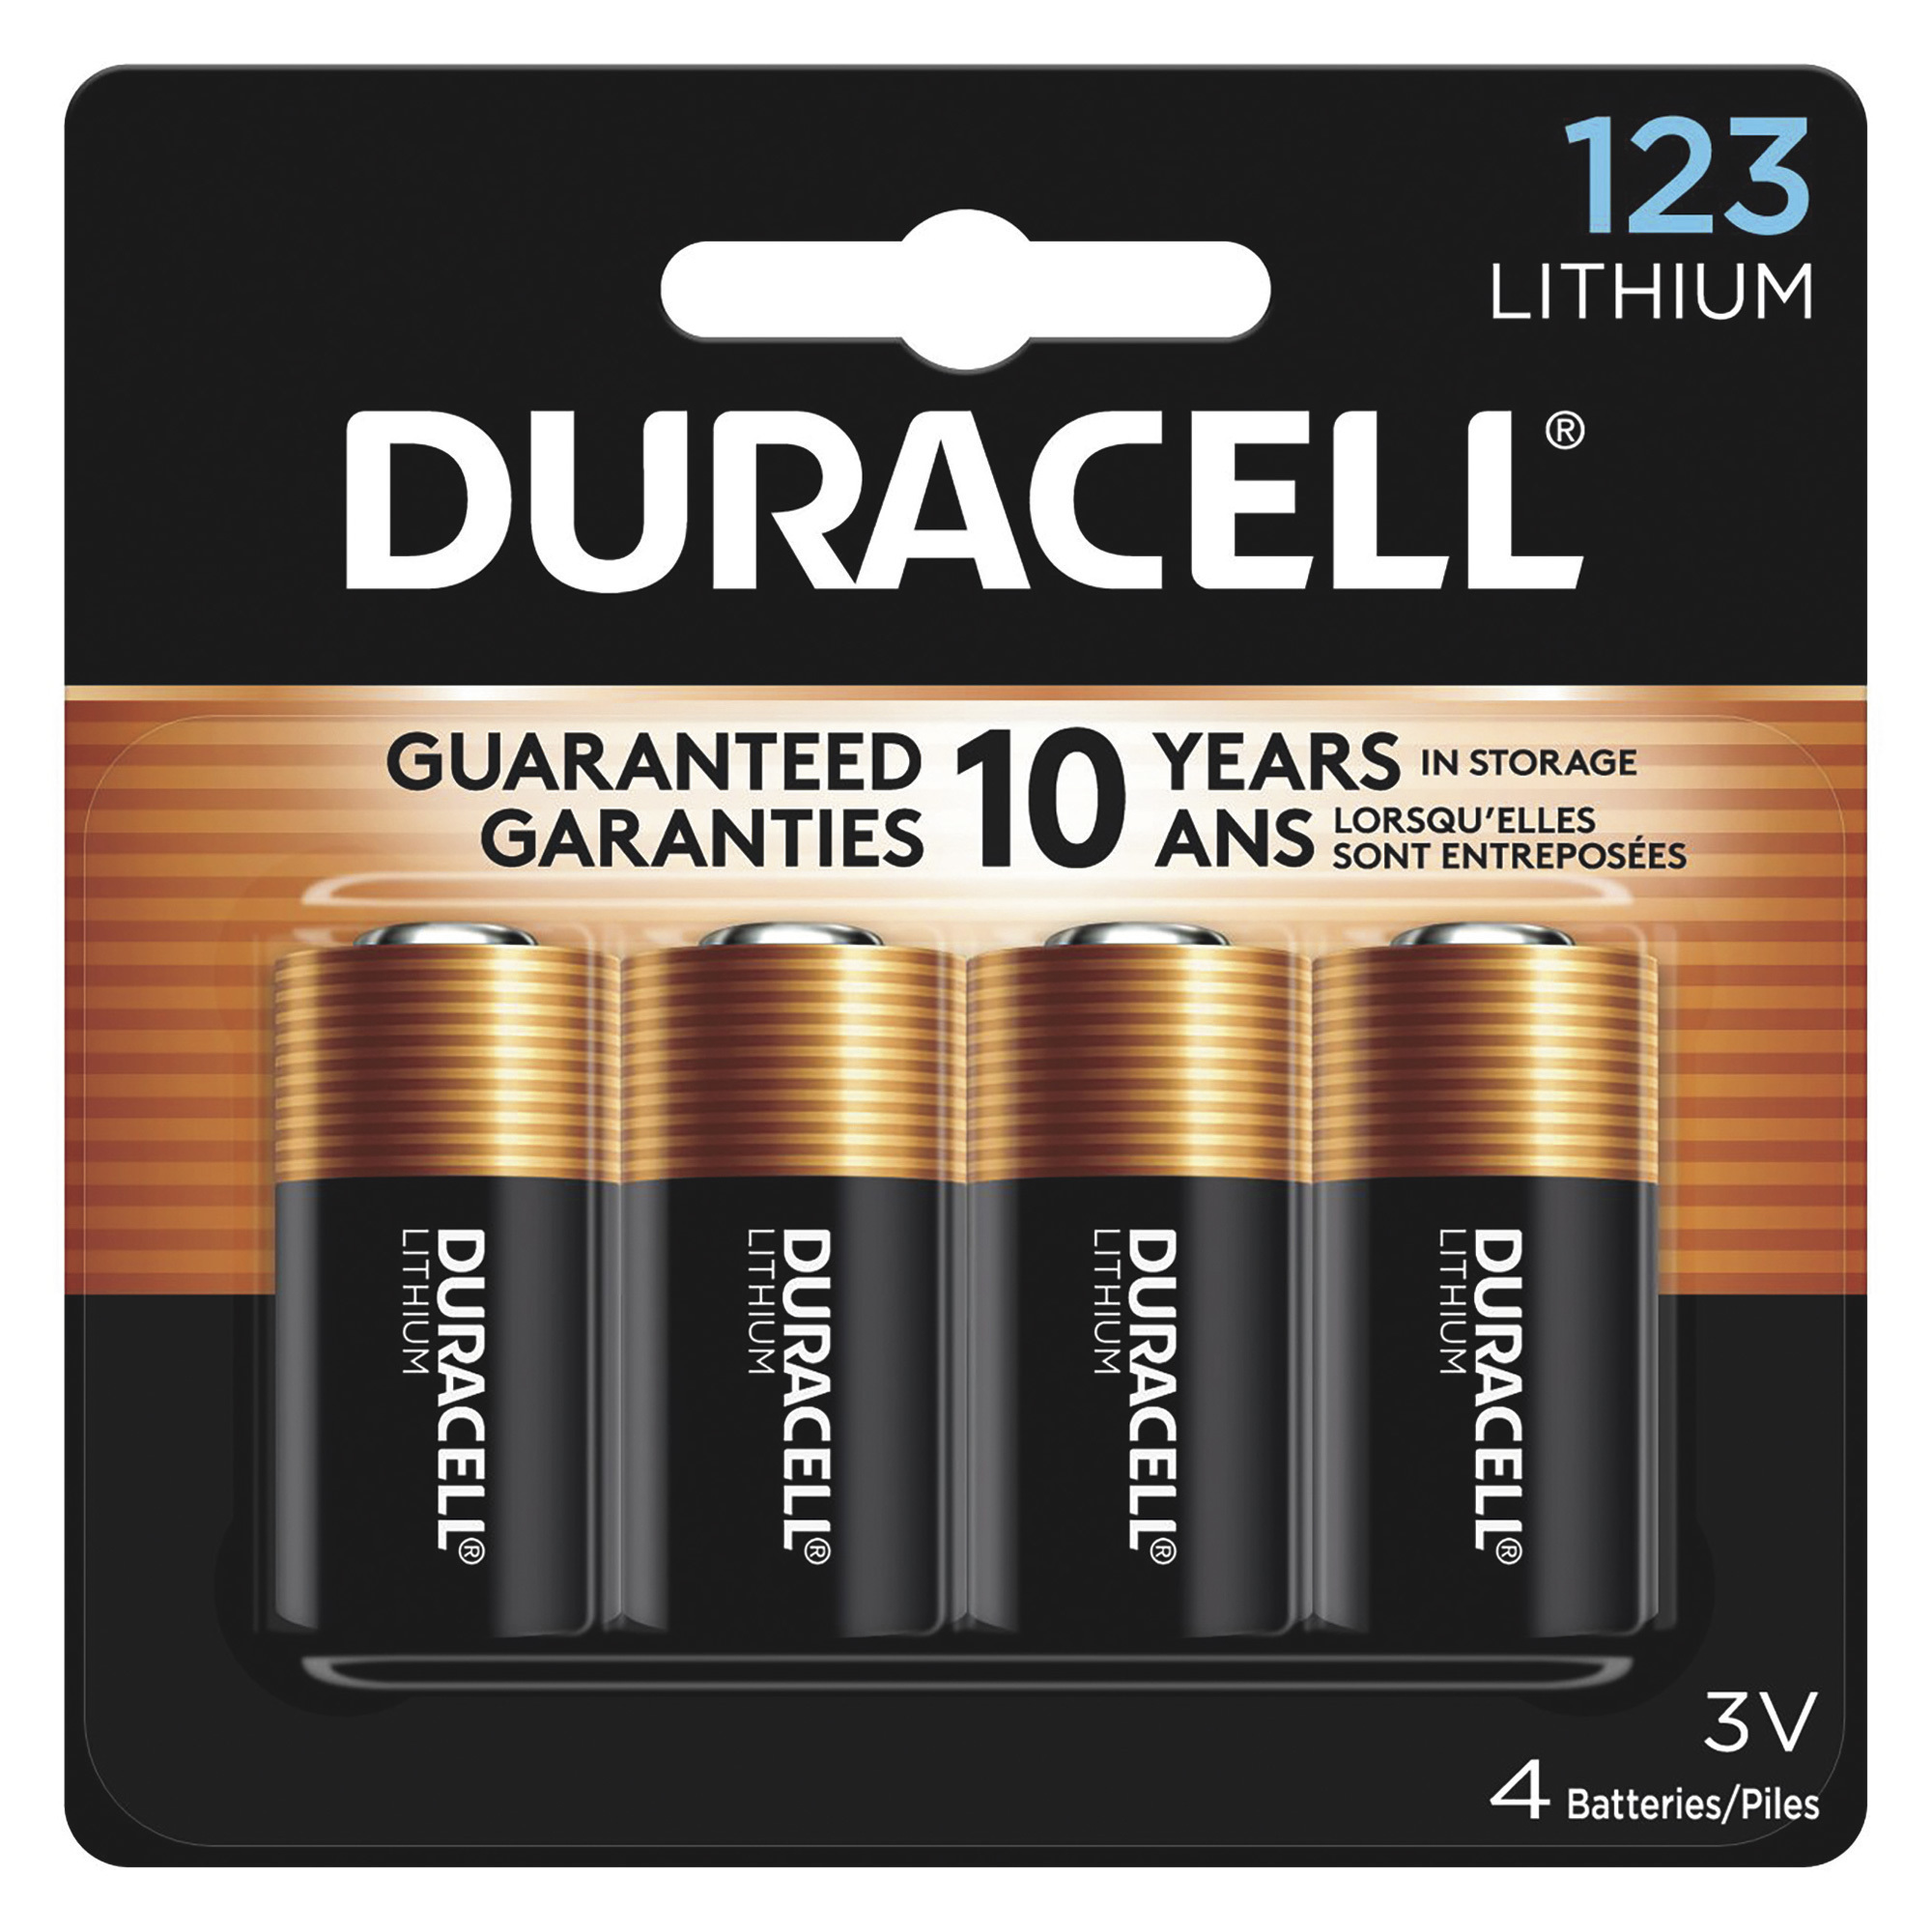 Duracell 123 Lithium Battery â 4-Pack, Model DURDL123AB4PK